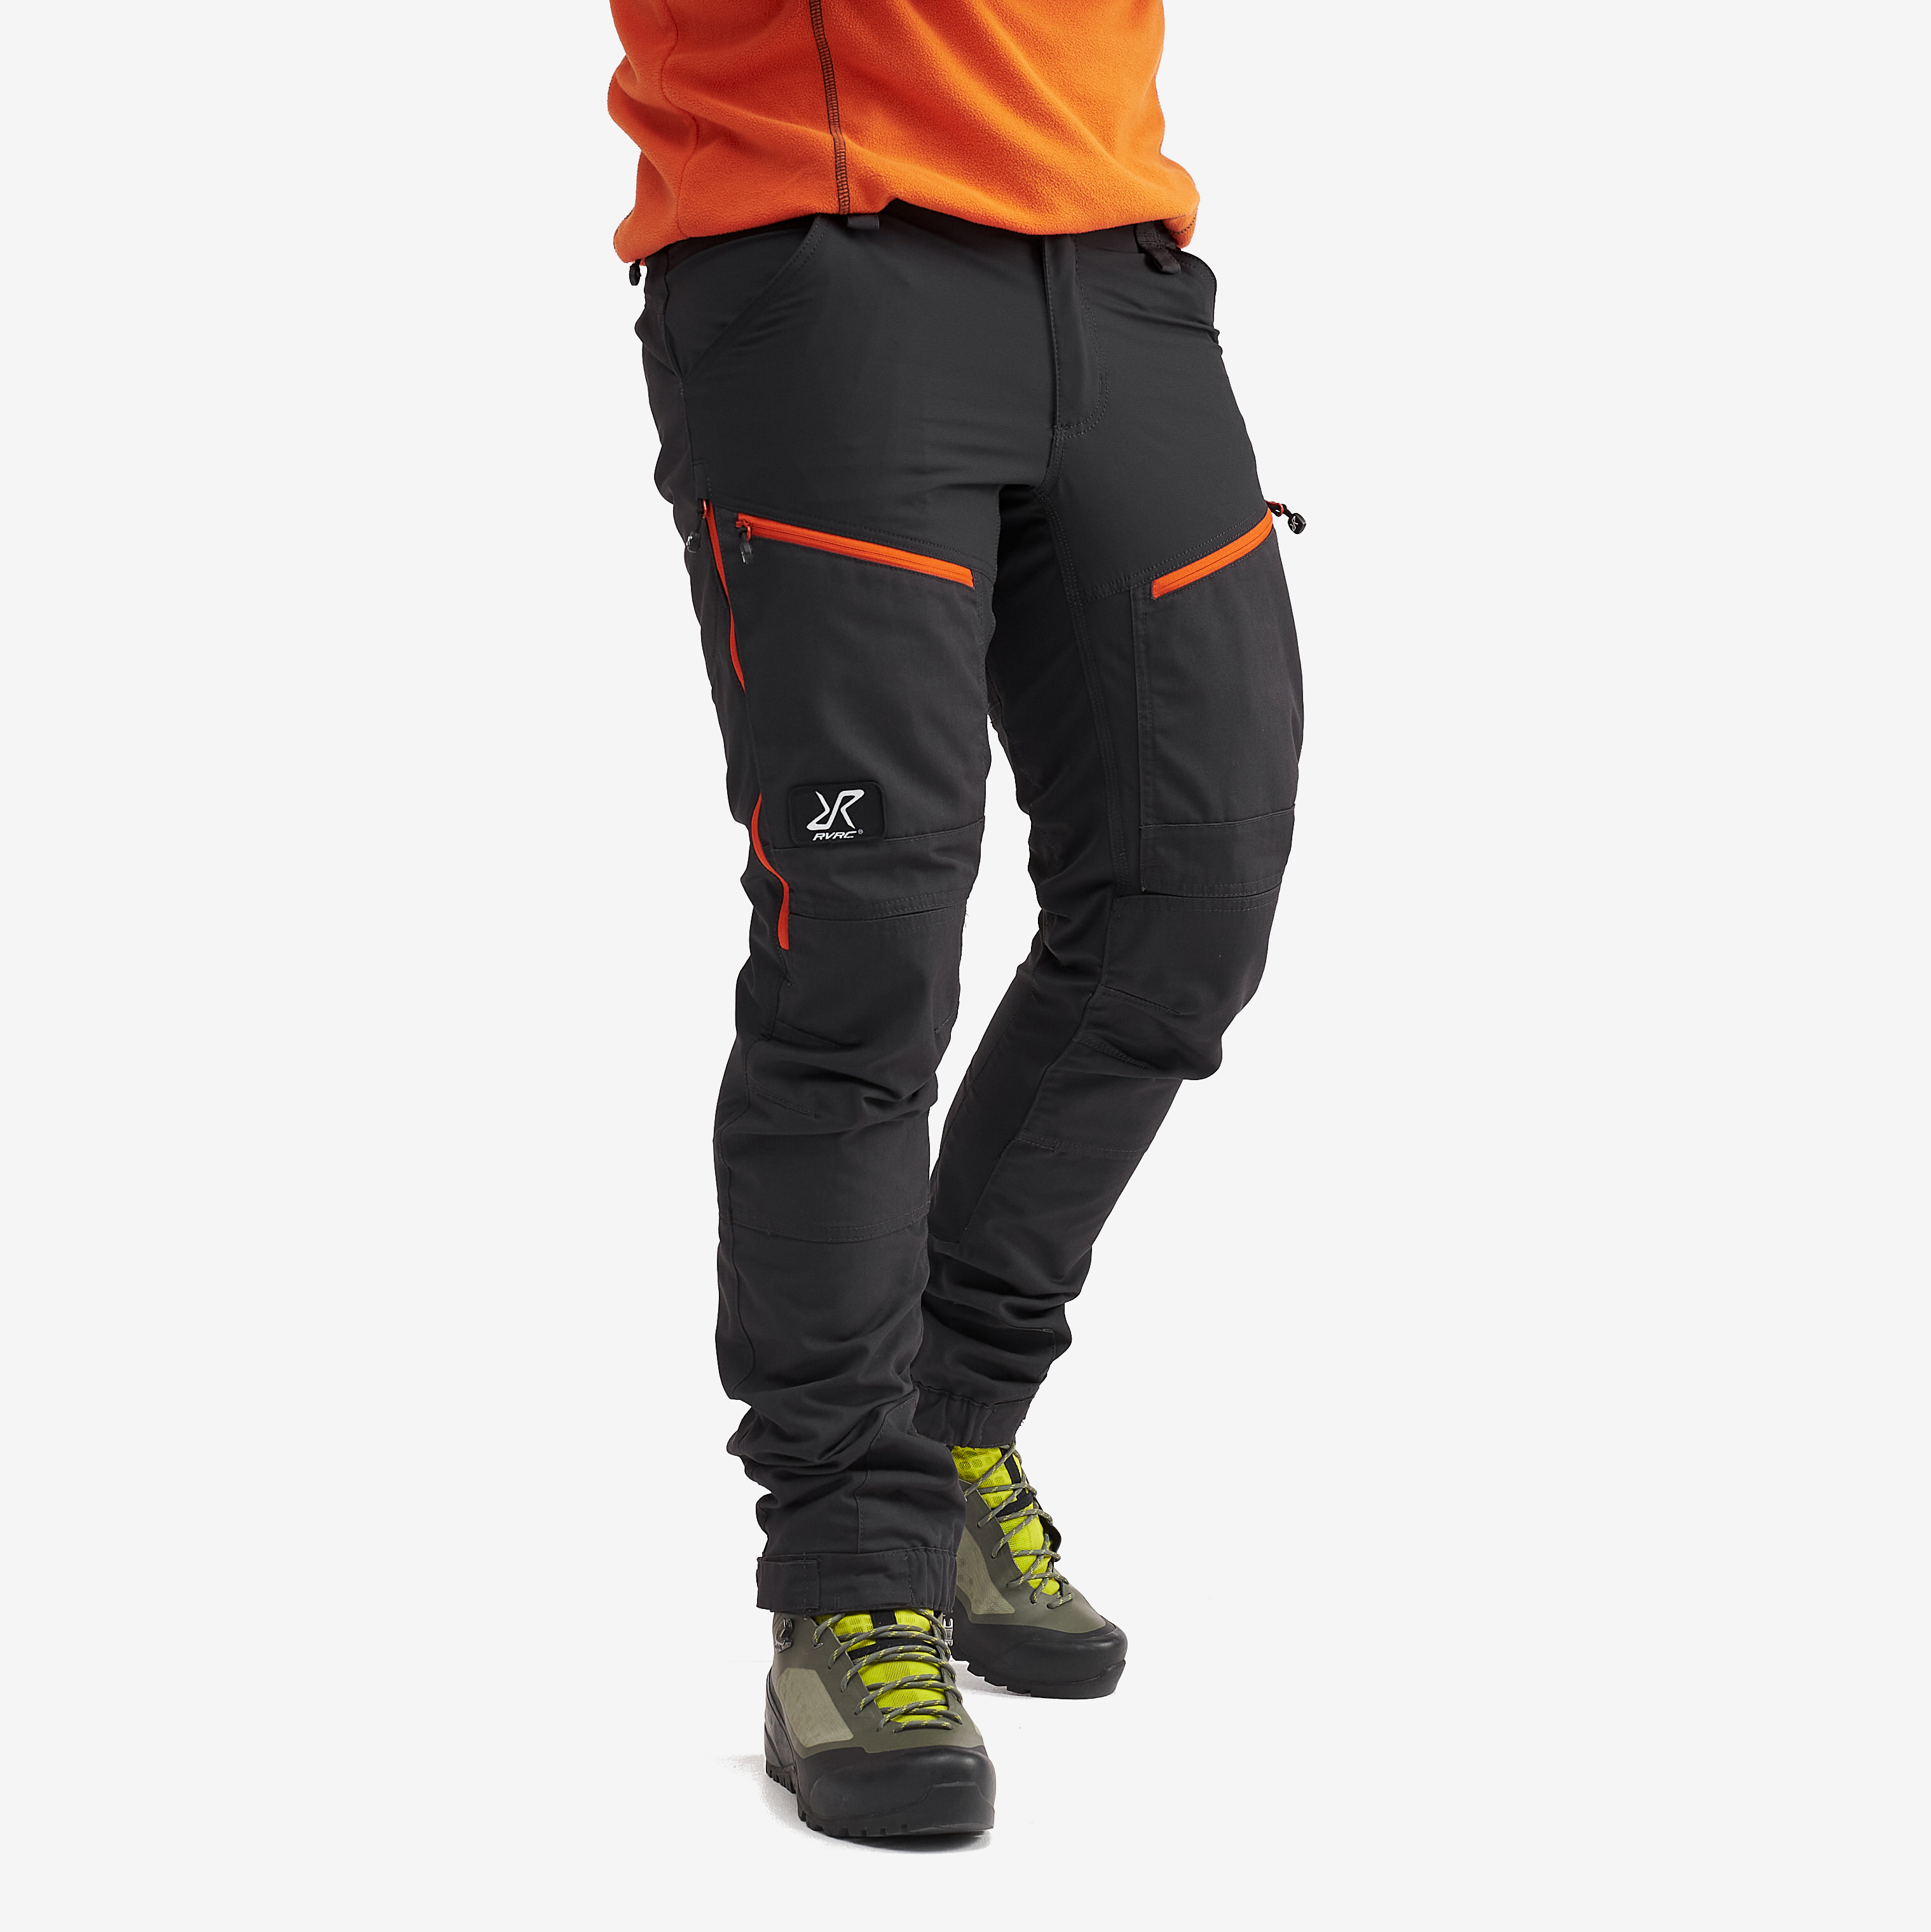 RVRC GP Pro hiking trousers for men in dark grey